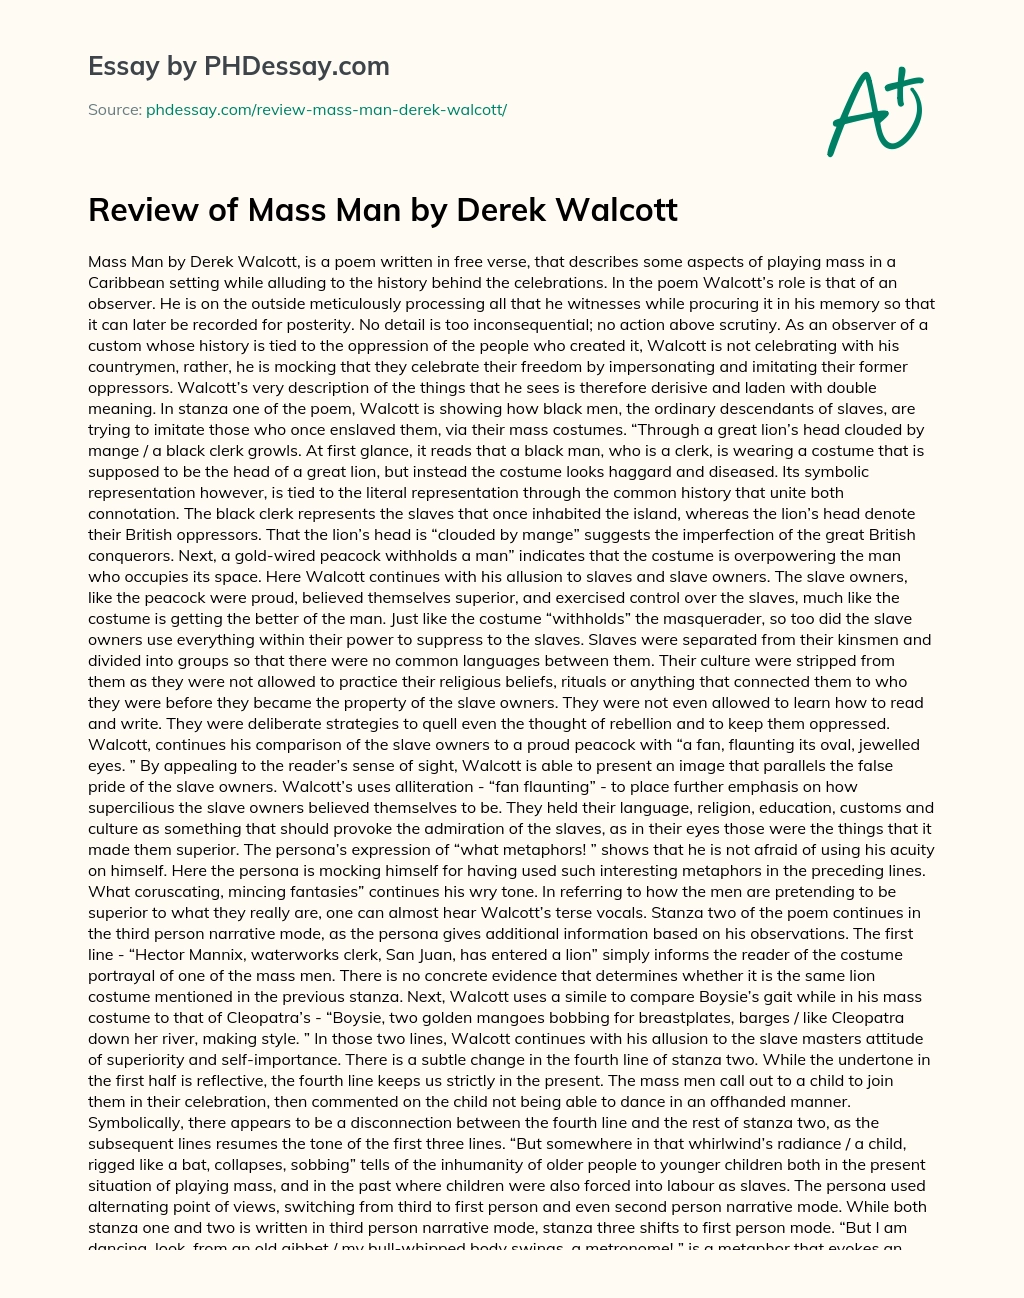 Review of Mass Man by Derek Walcott essay